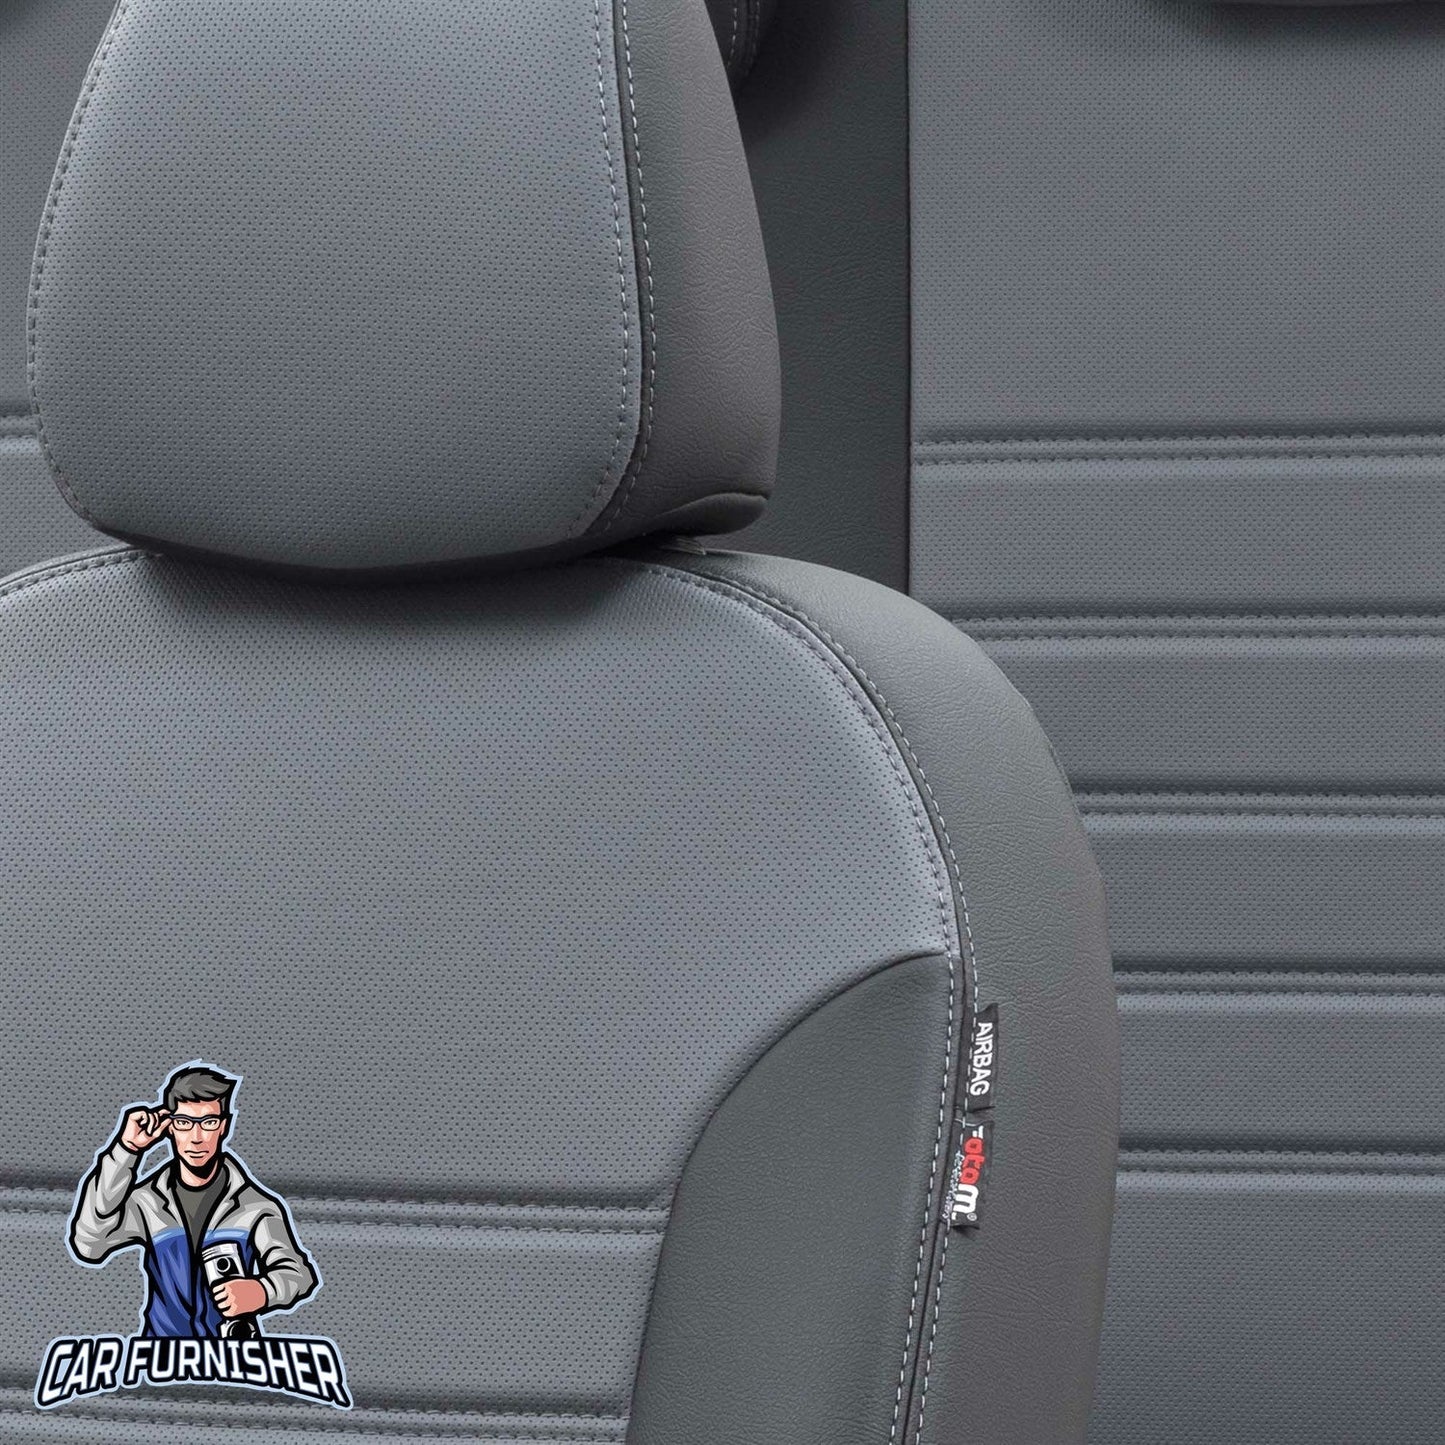 Daihatsu Materia Seat Covers Istanbul Leather Design Smoked Black Leather